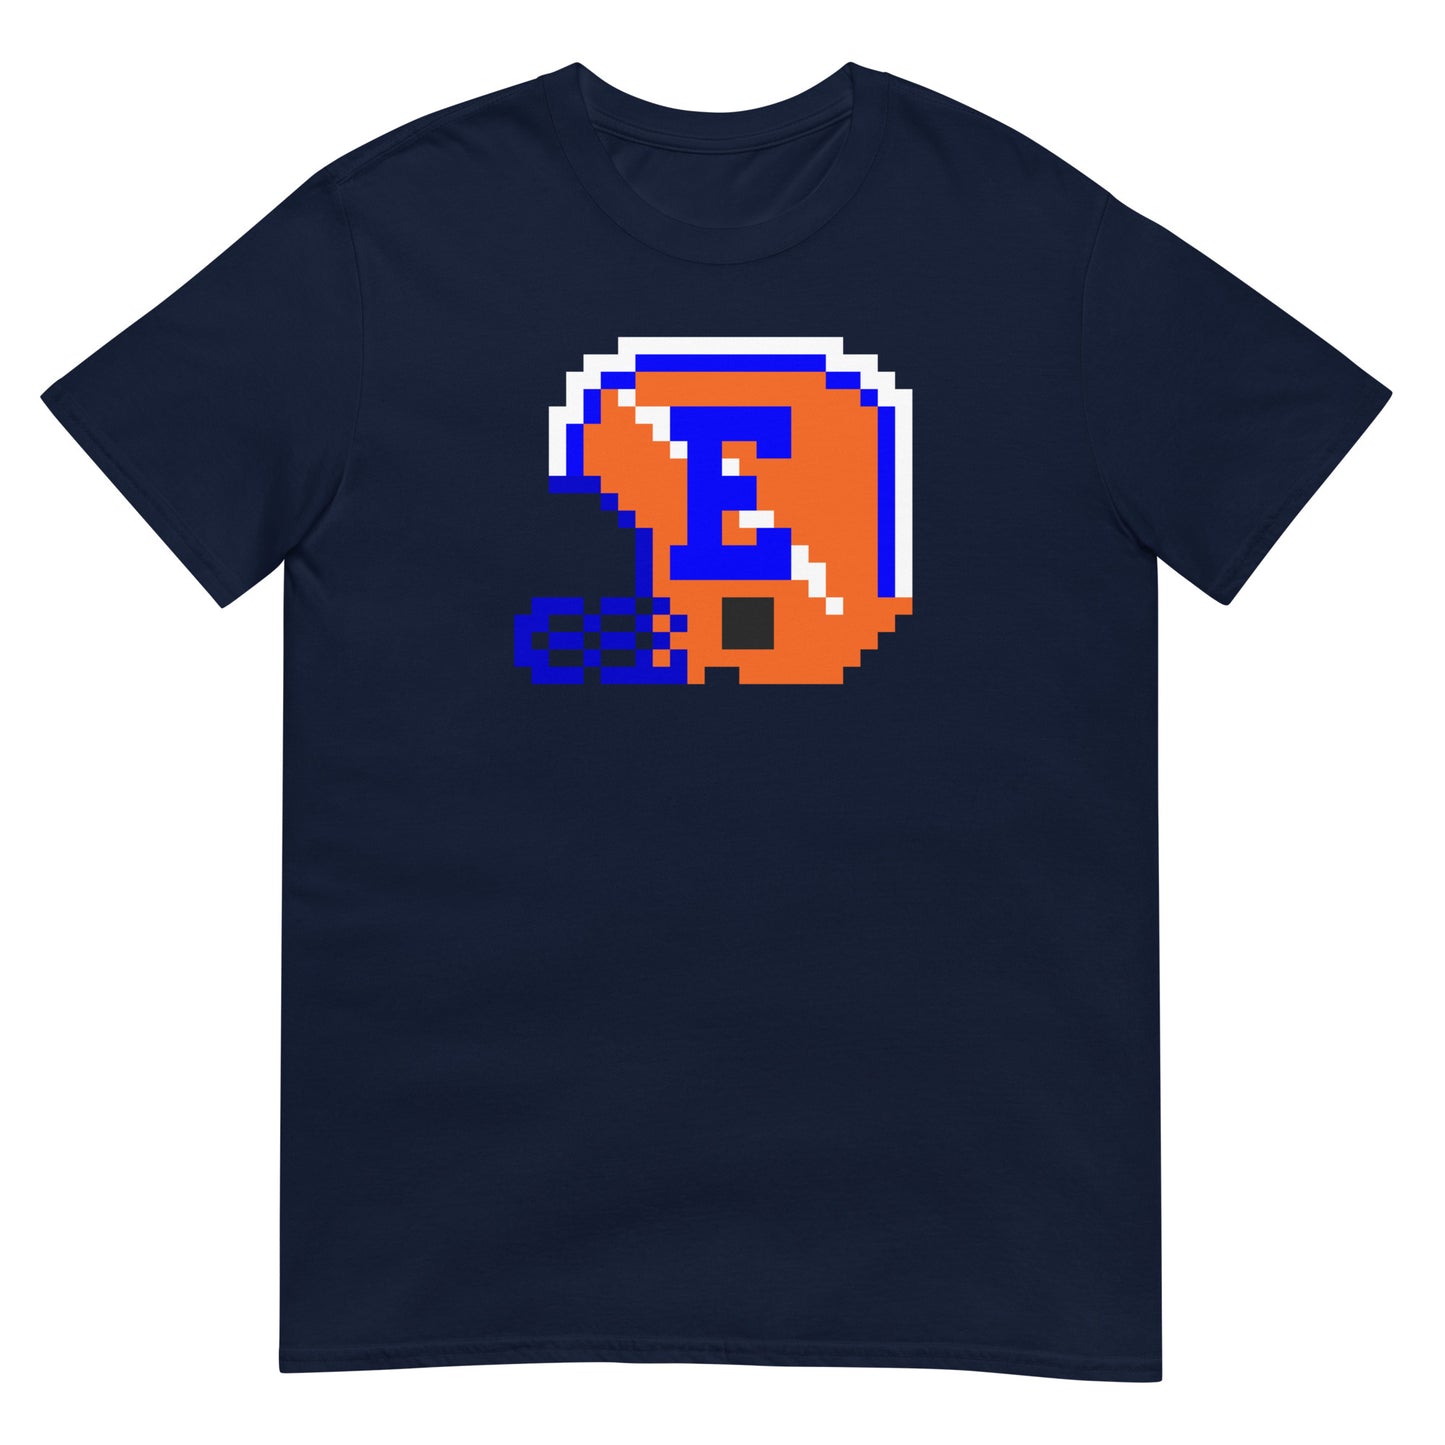 Milan Edison Chargers Short-Sleeve Unisex T-Shirt